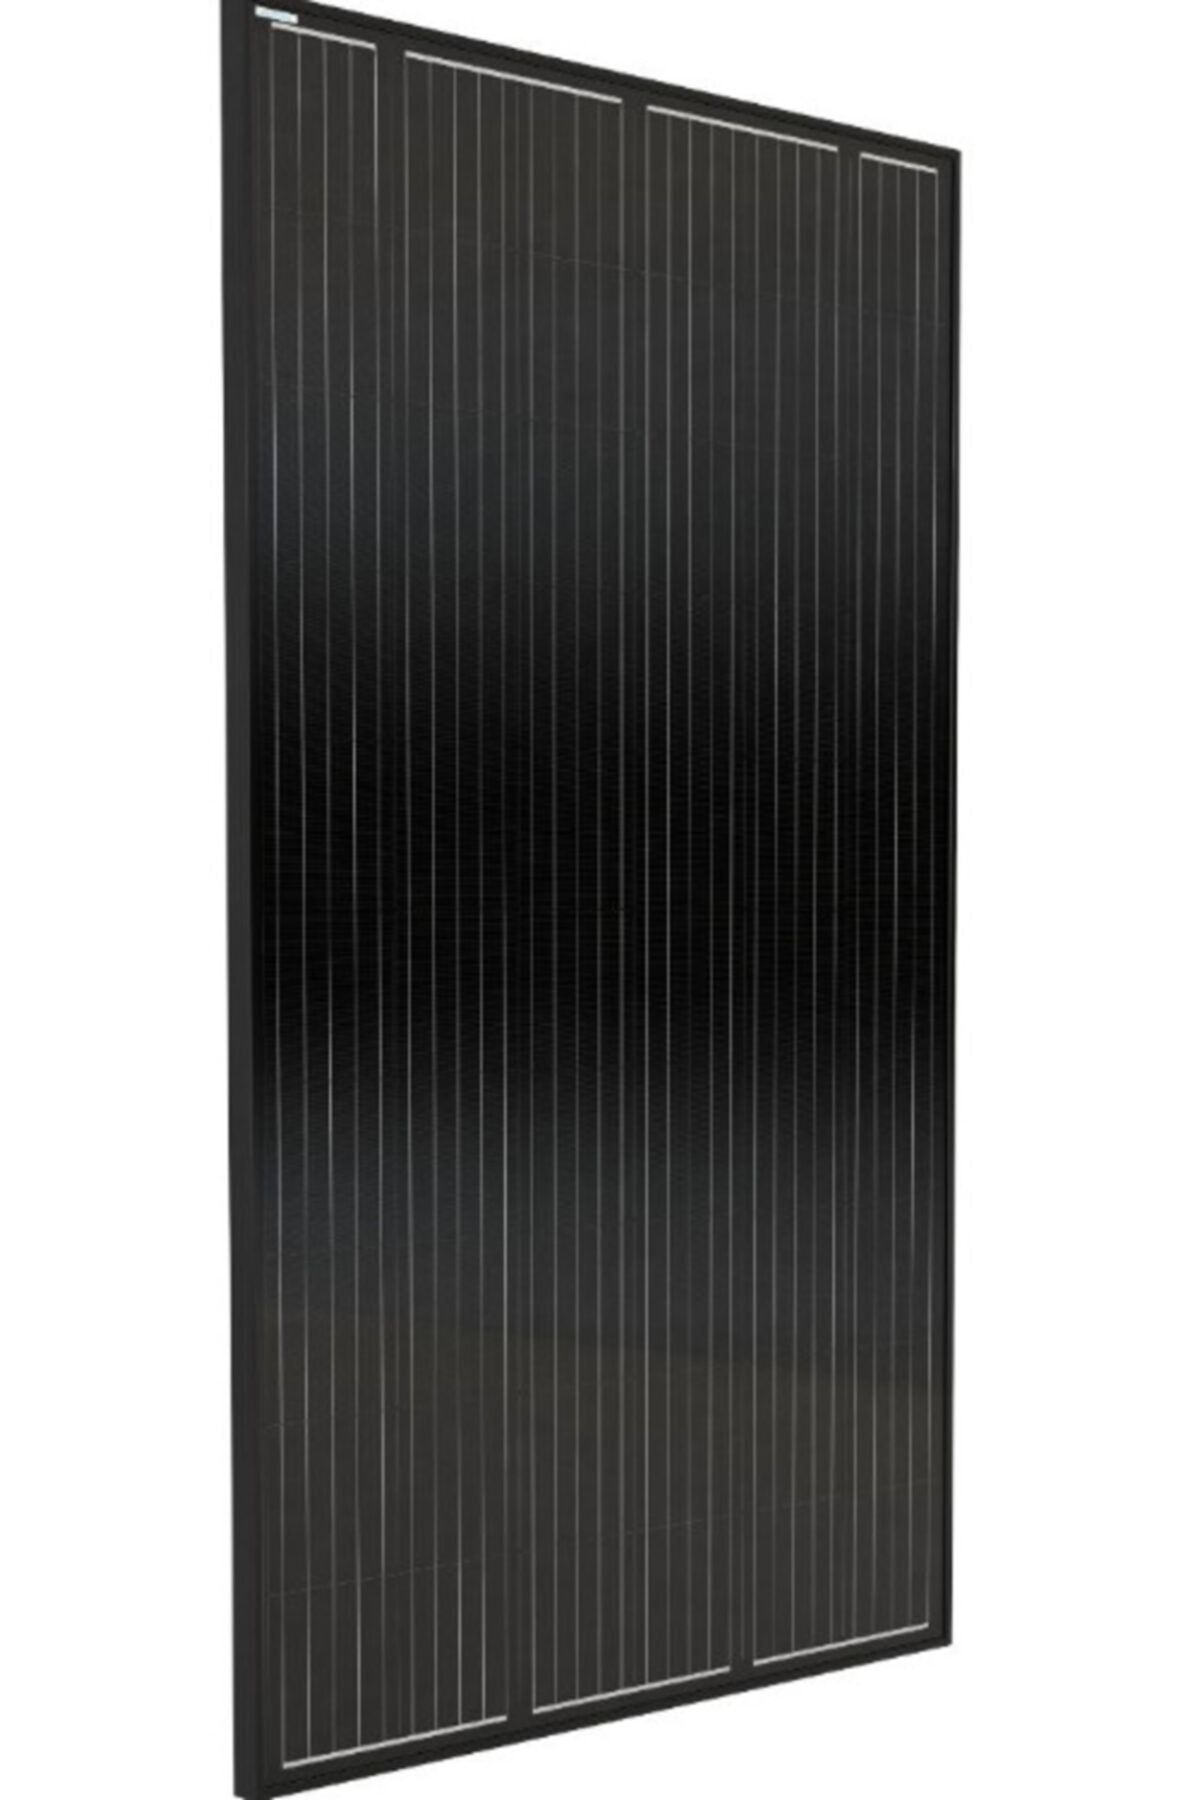 Tommatech 330 Watt 60 Percmono Full Black Güneş Paneli